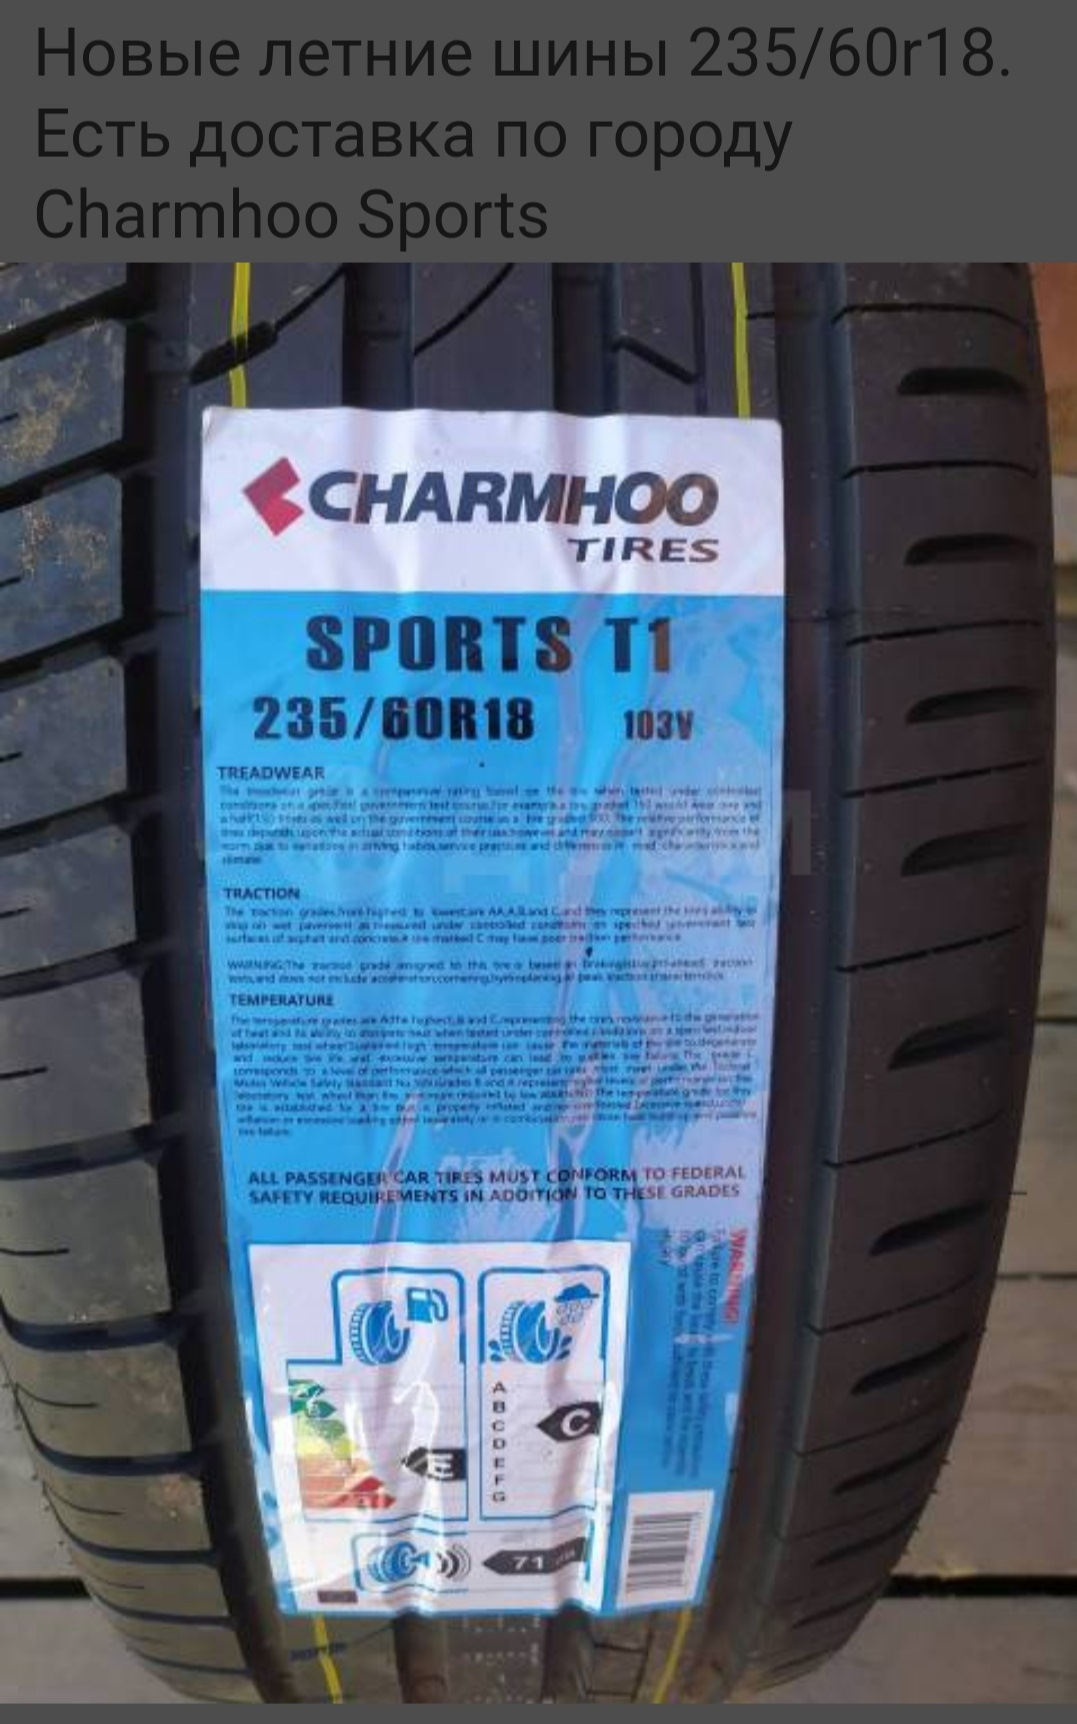 Charmhoo sport отзывы. 235/60r18 Charmhoo Sports t1. Charmhoo Sports t1 шины. Charmhoo Sport t1 235/60 r18. 235/45r17 Charmhoo Sports t1.